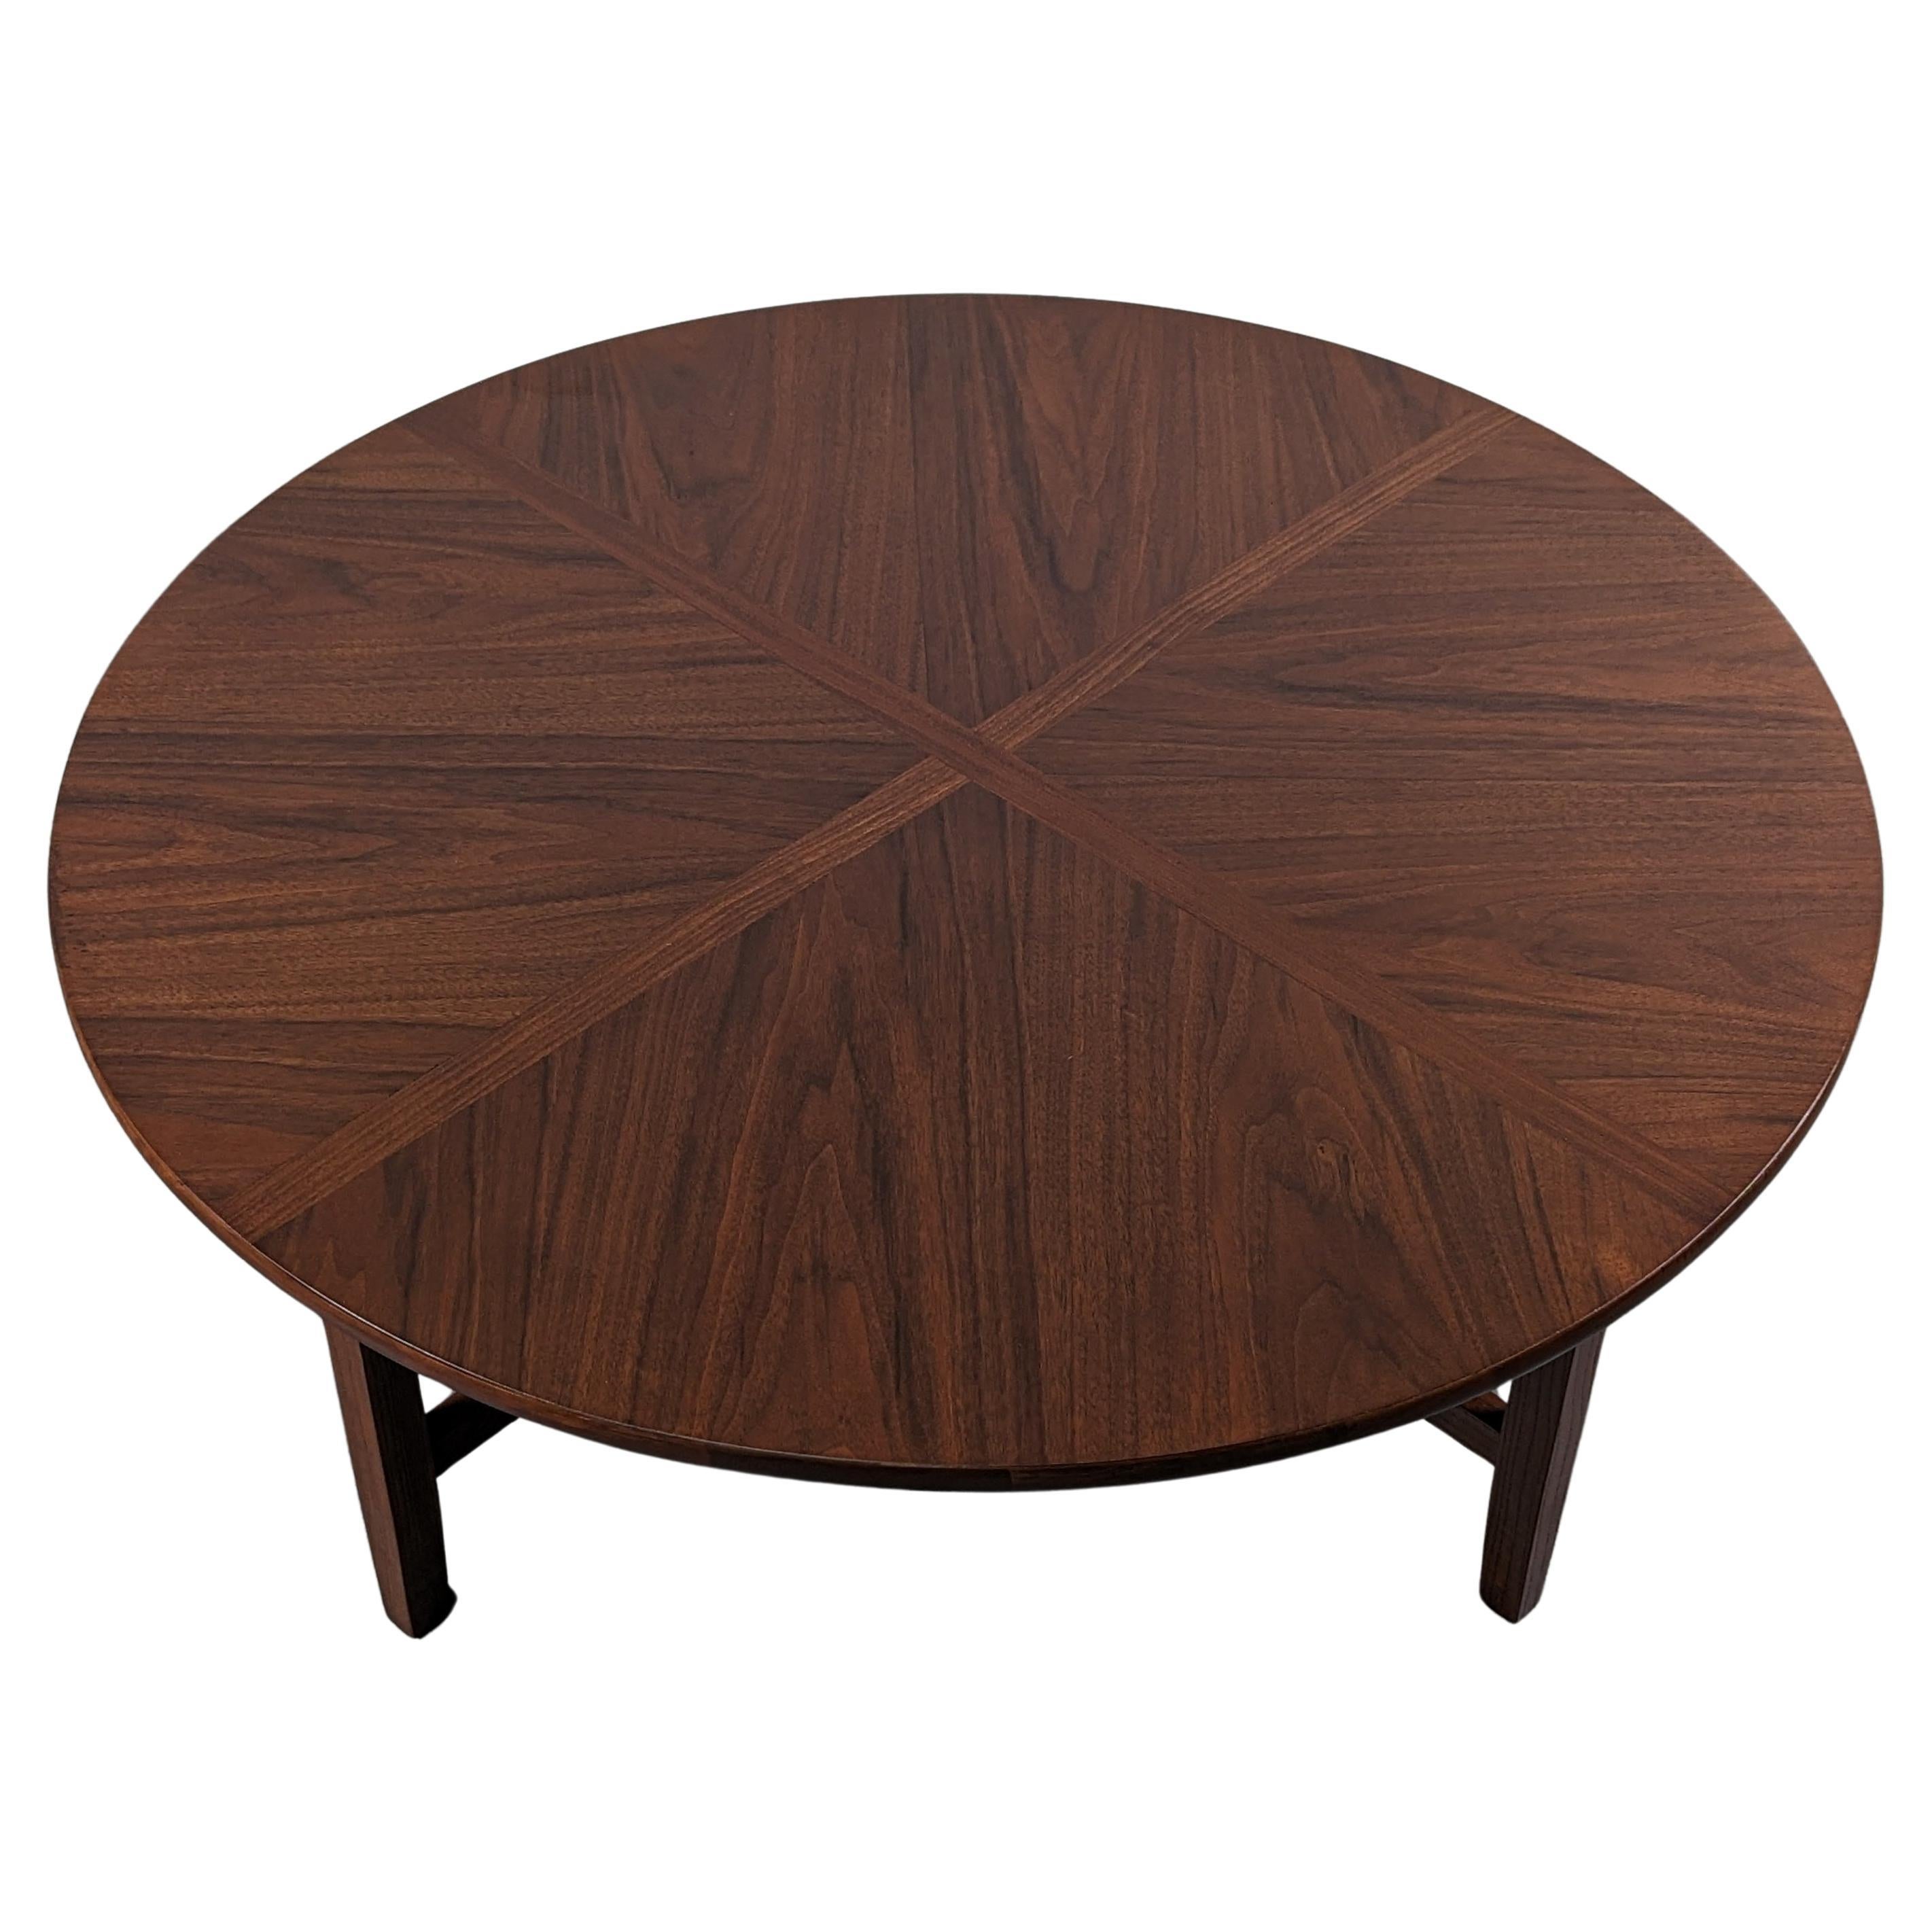 Refinished Mid Century Modern Walnut & Oak Coffee Table, c1960s For Sale